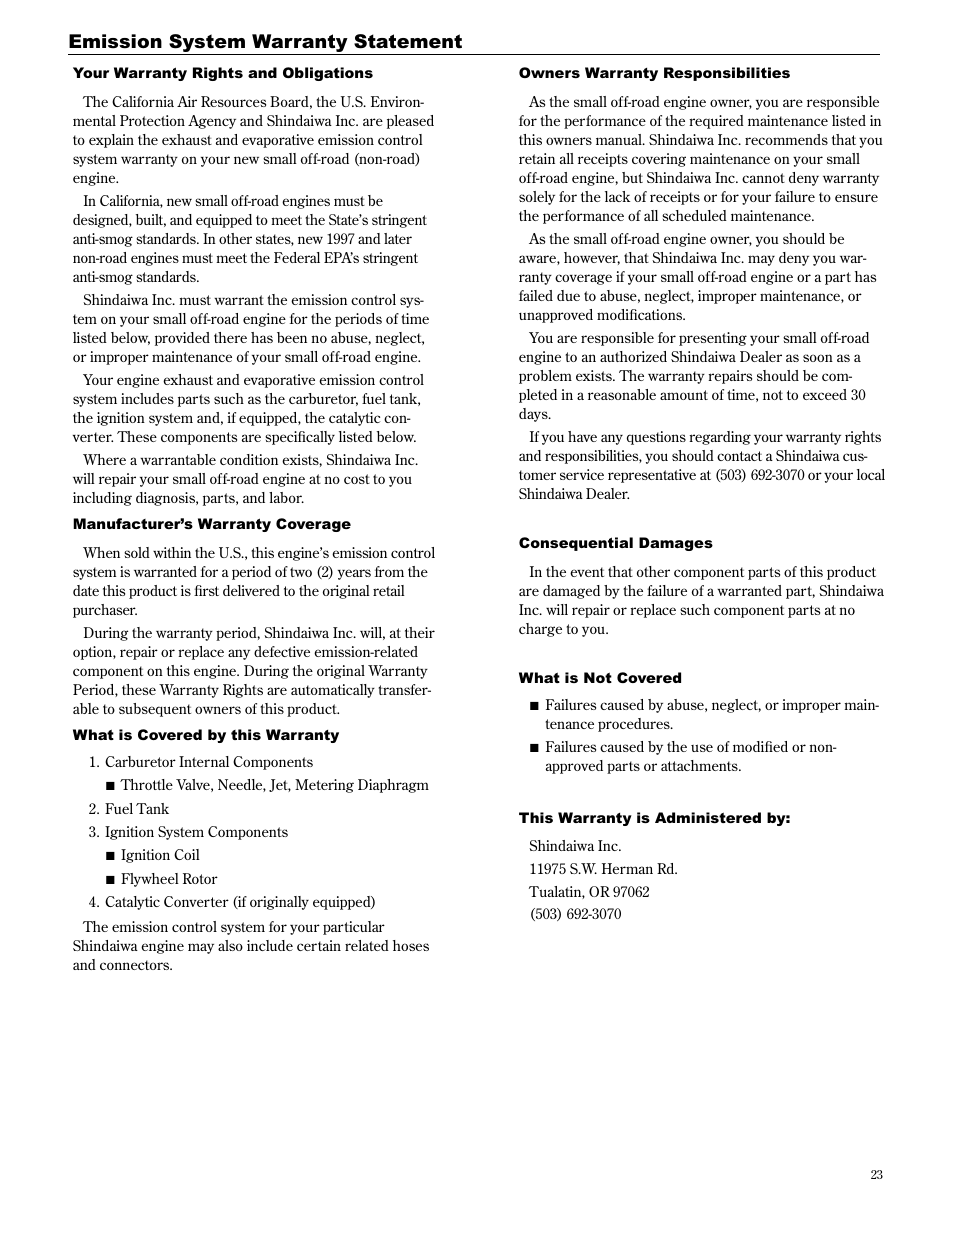 Emission system warranty statement | Shindaiwa 89304 User Manual | Page 23 / 72